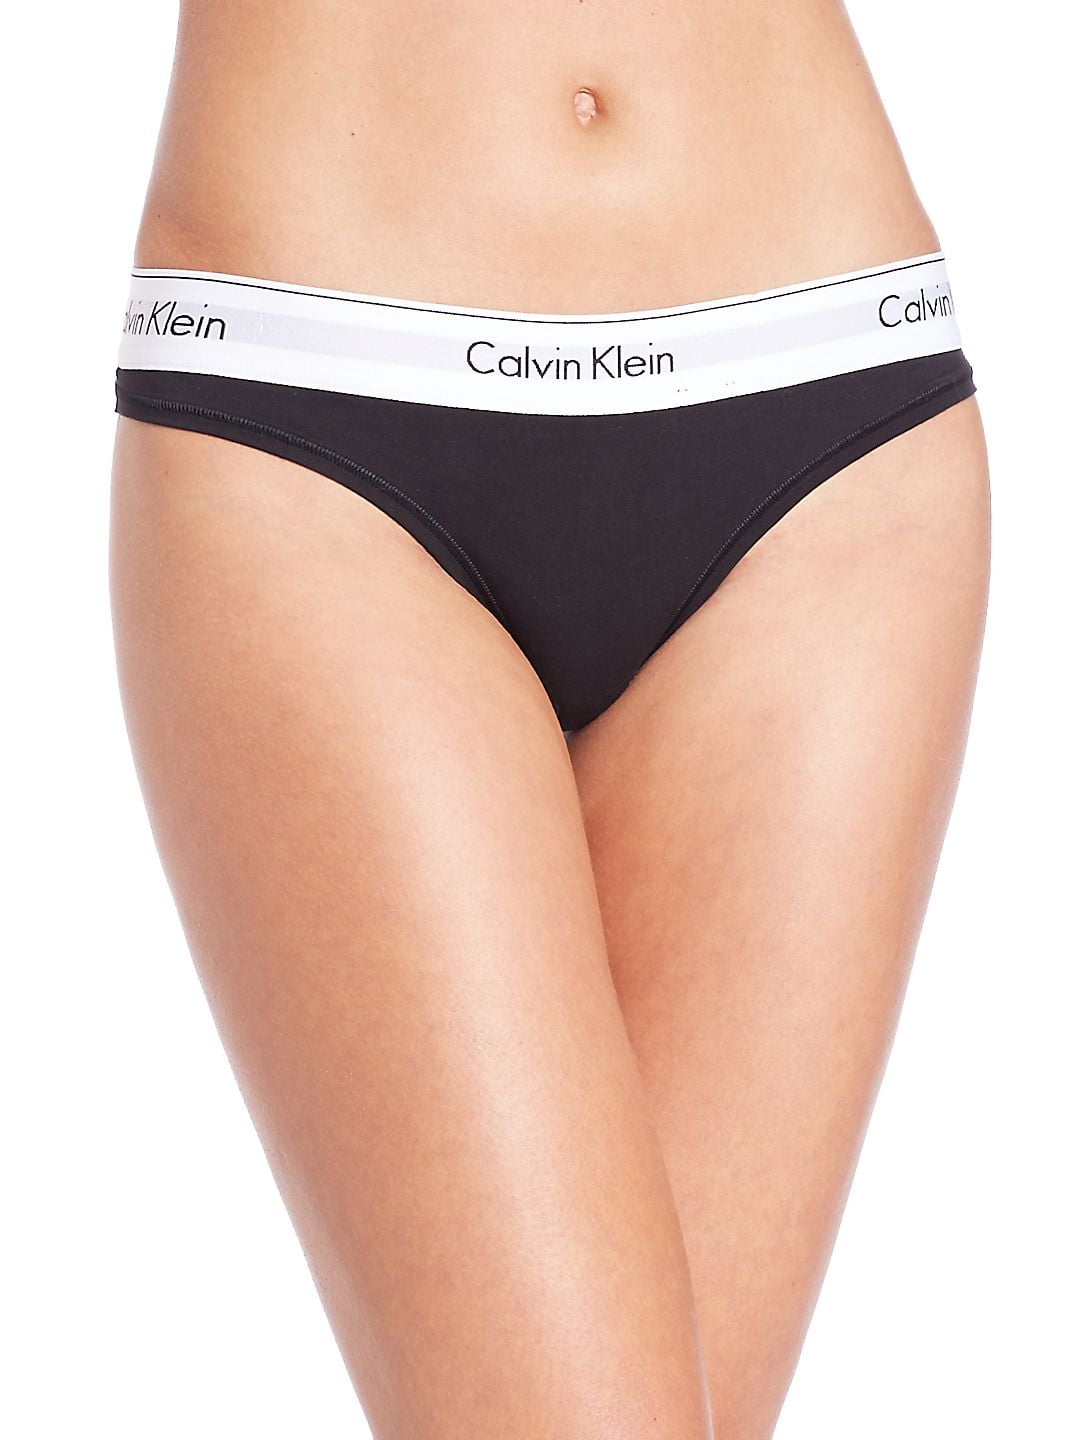 Calvin Klein Women's 3-Cotton Stretch Thongs Large Gray/Black/Peach